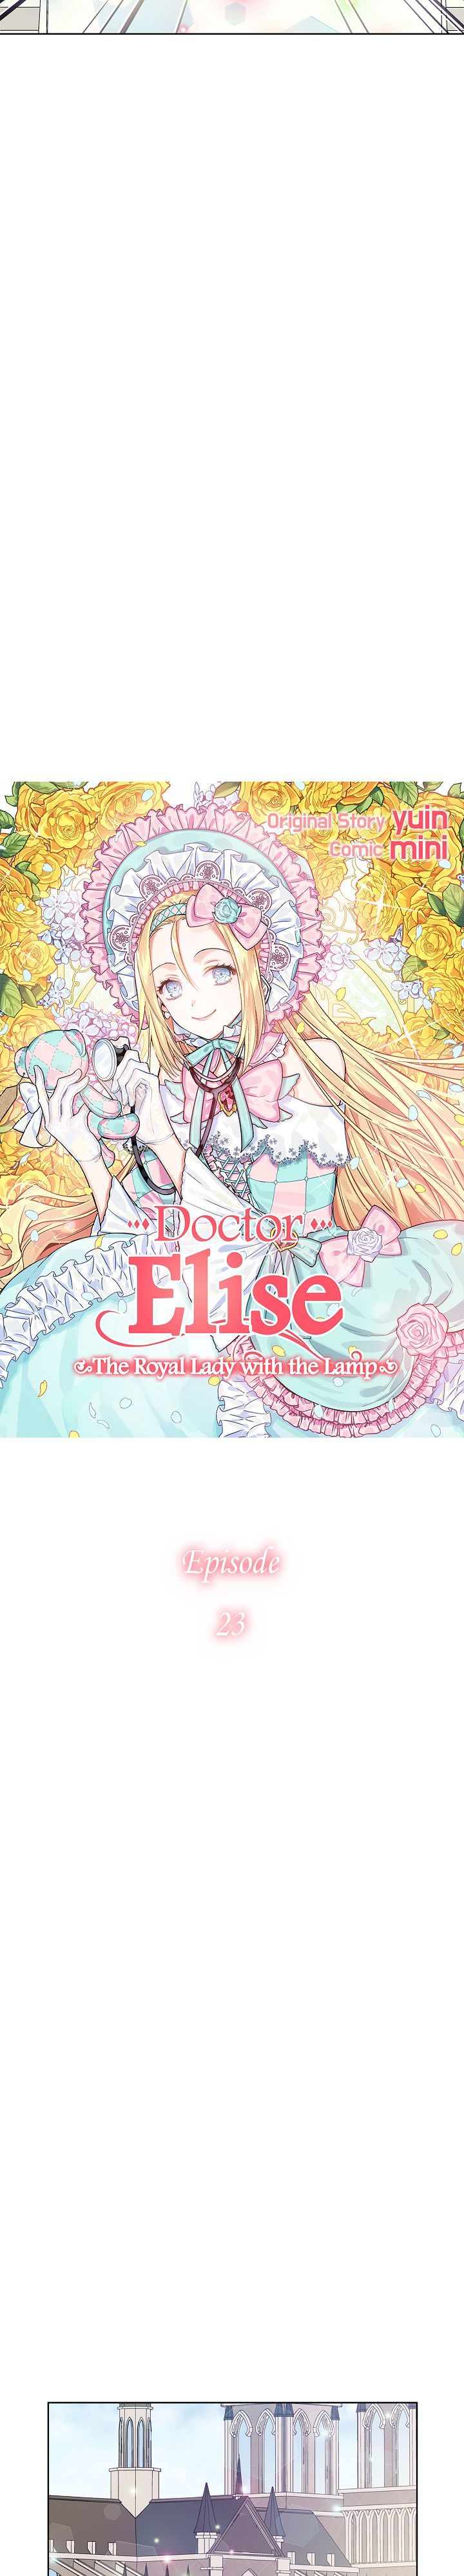 Doctor Elise 23